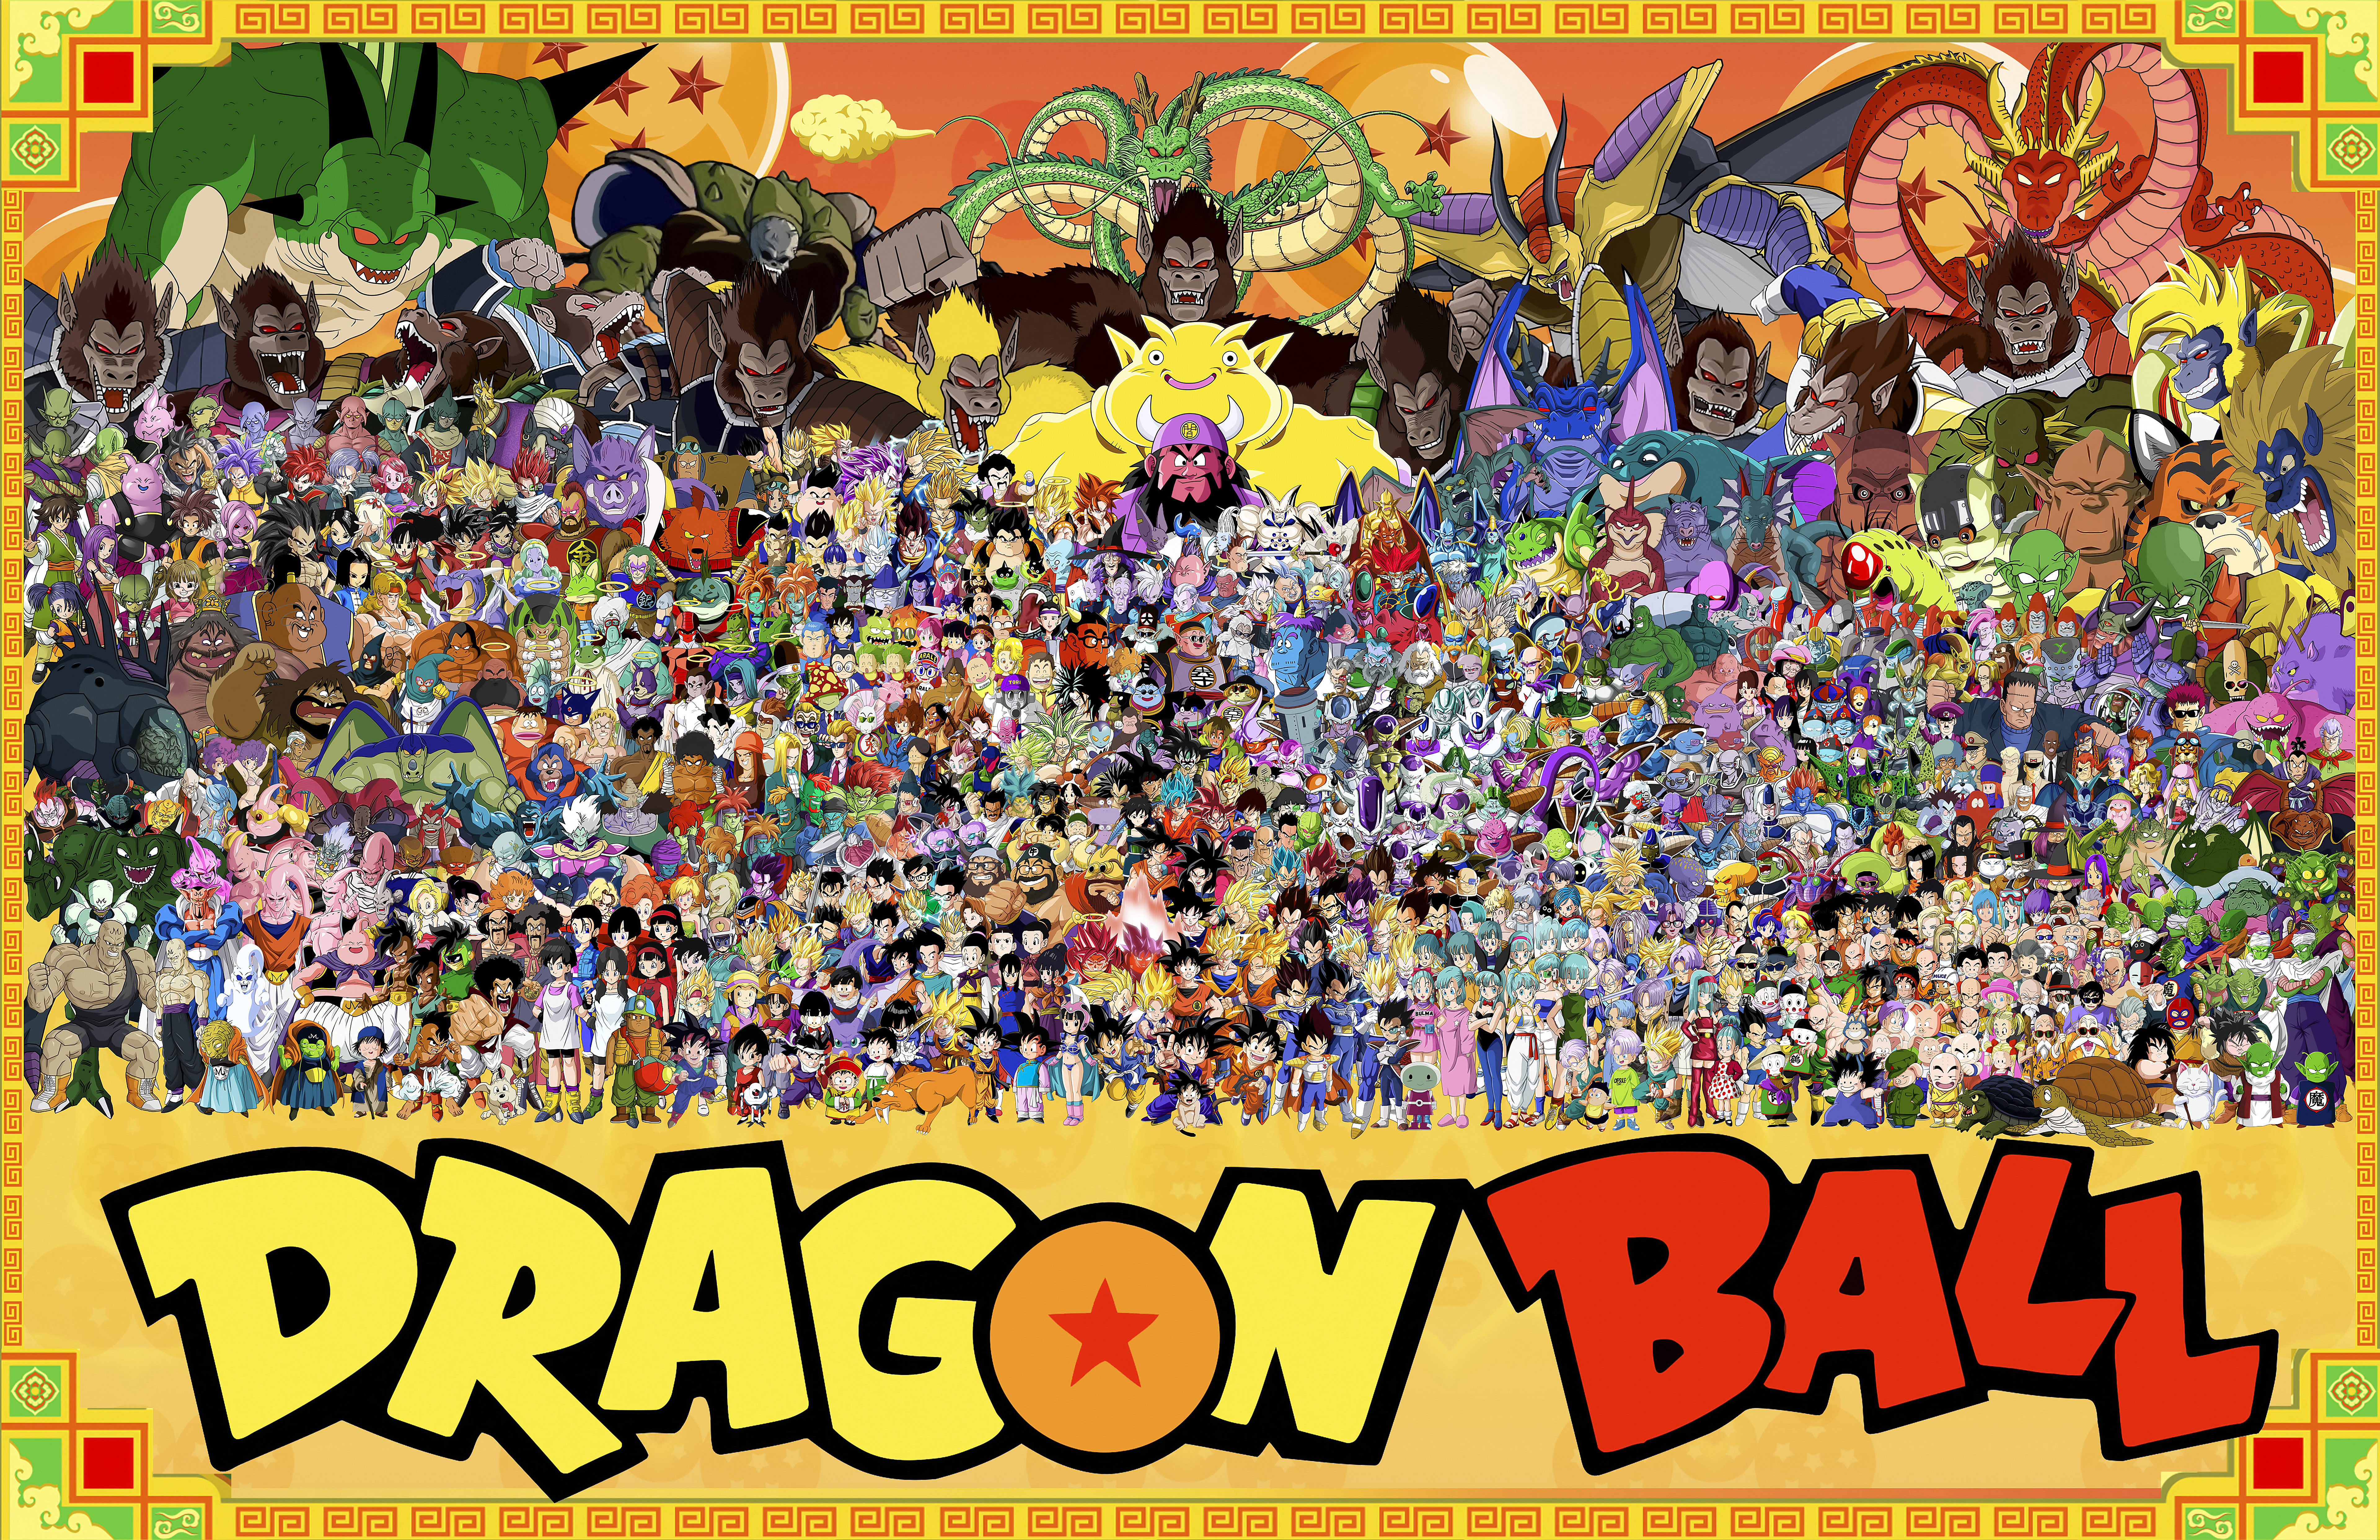 Anime 7680x4969 Dragon Ball Dragon Ball FighterZ Dragon Ball GT anime anime boys anime girls Dragon Ball Z Dragon Ball Super